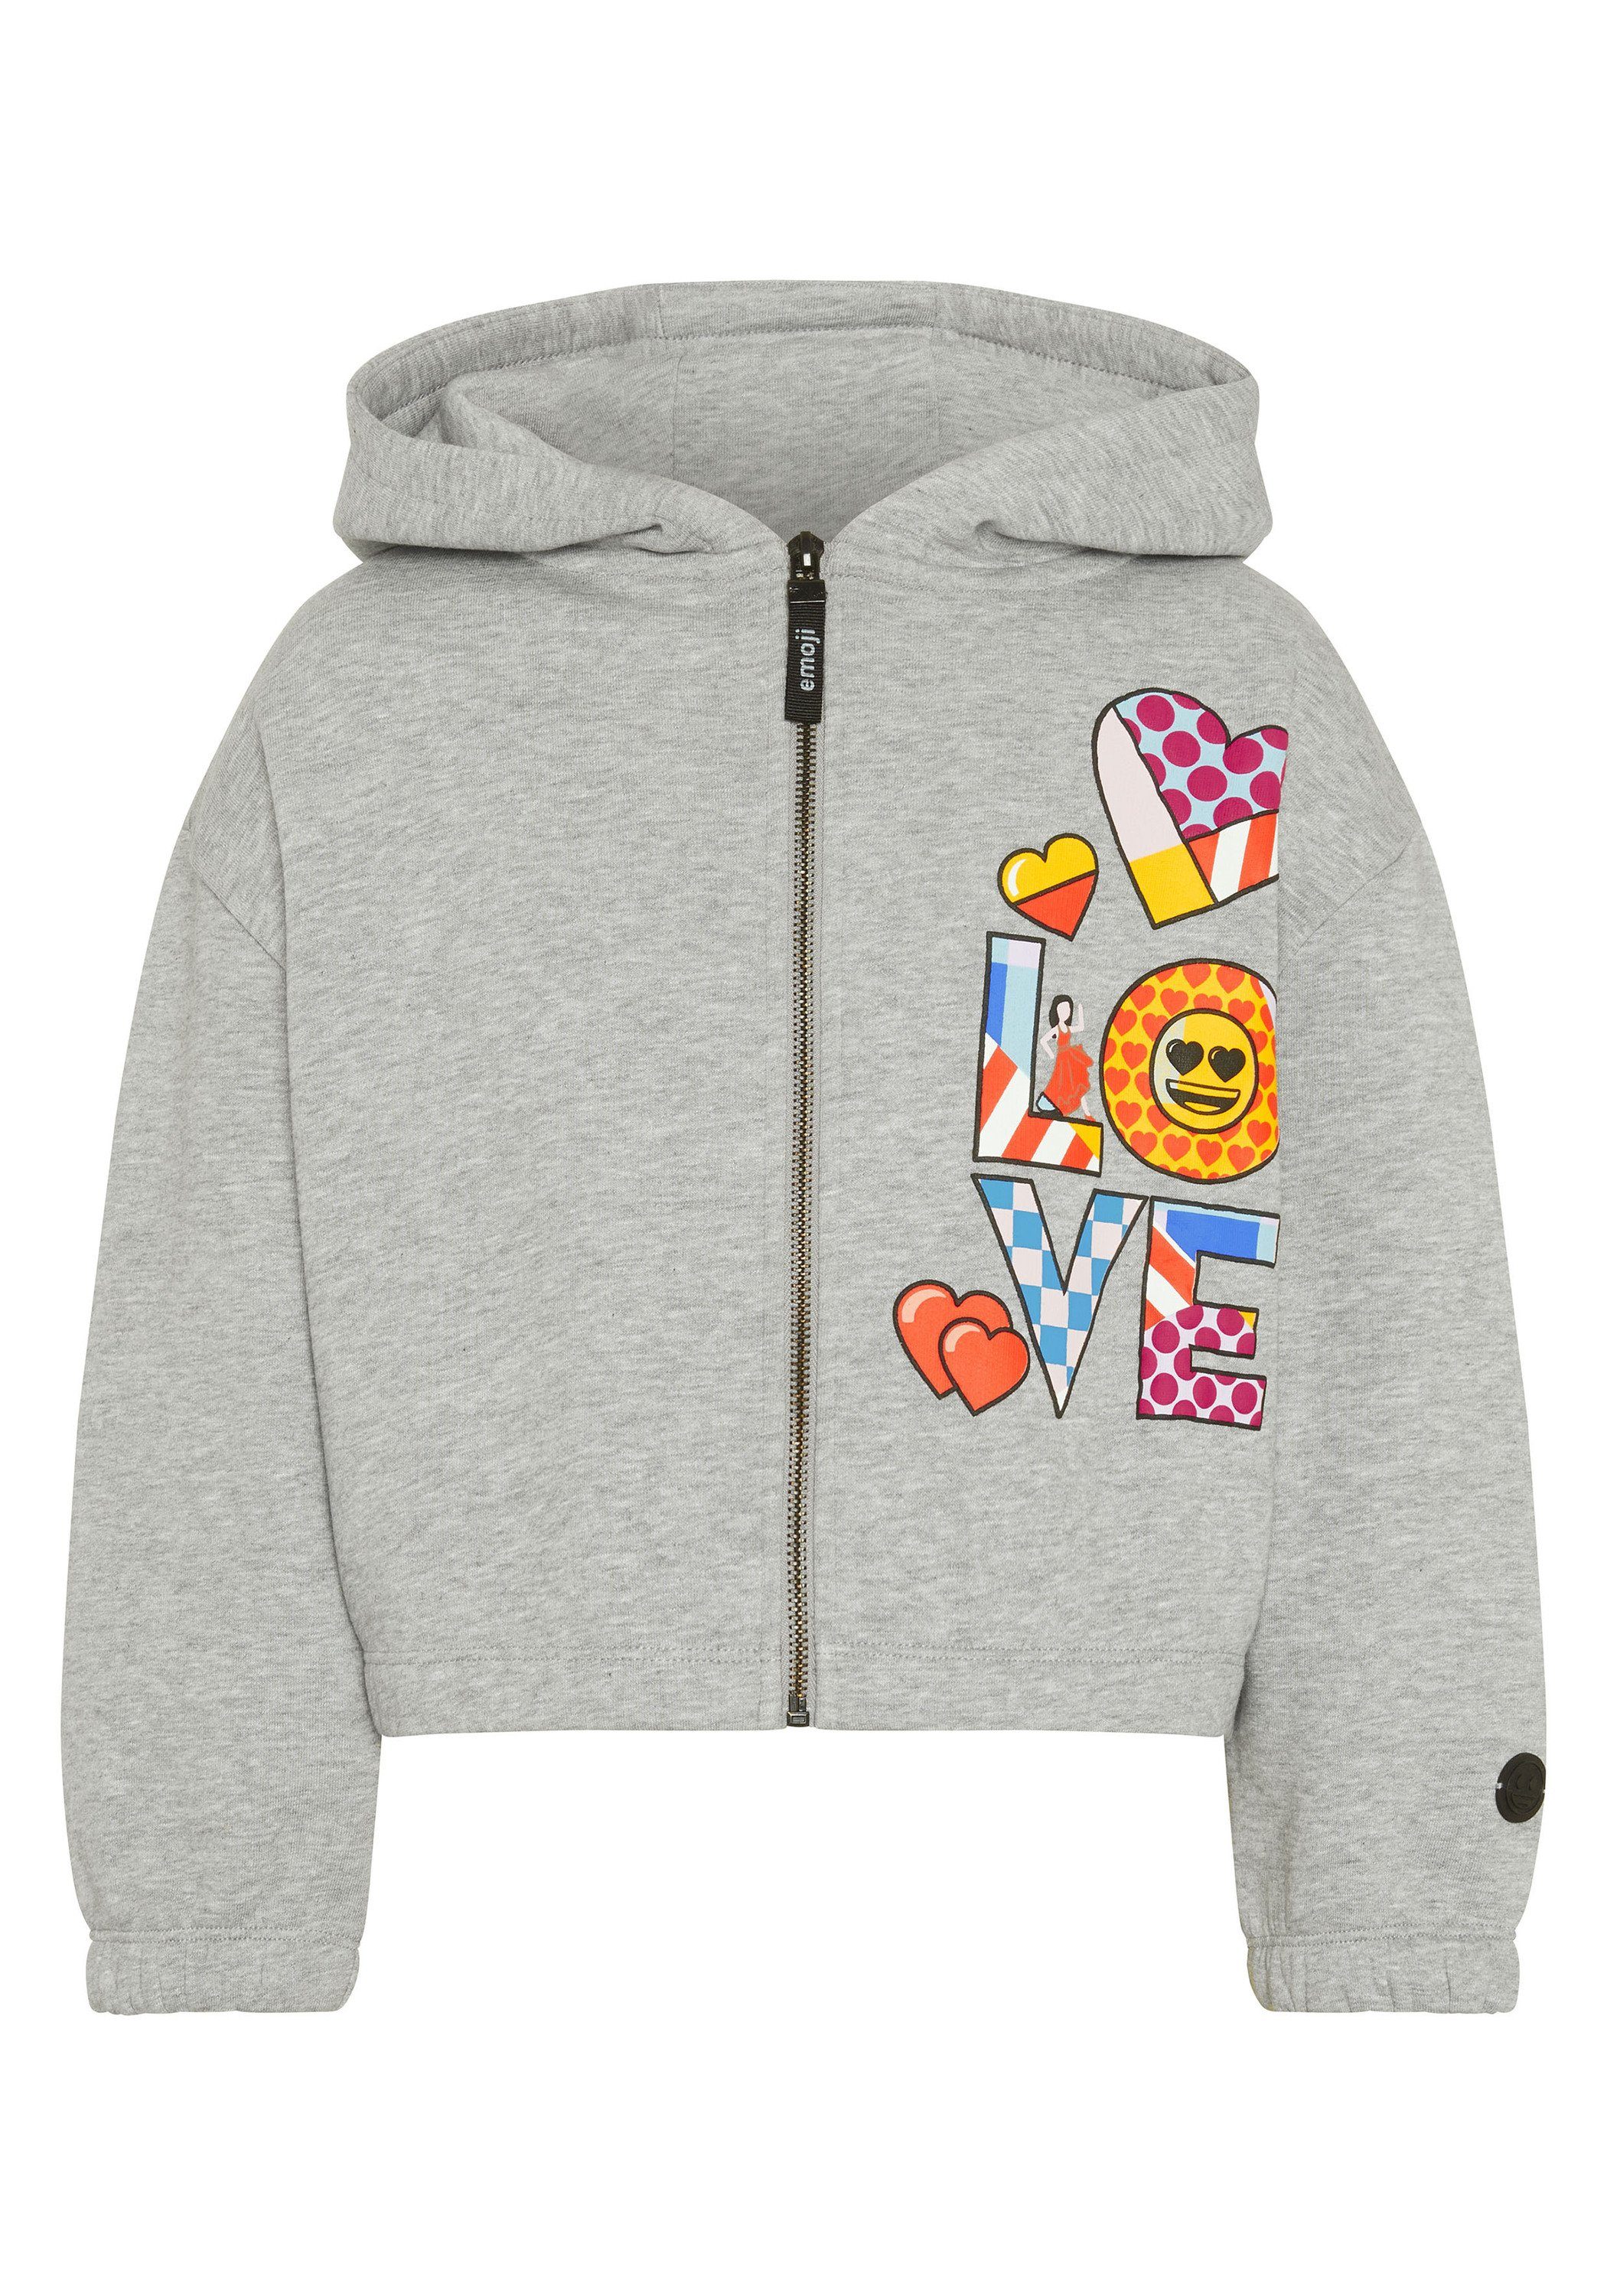 LOVE-Print Kapuze mit Sweatjacke Emoji und